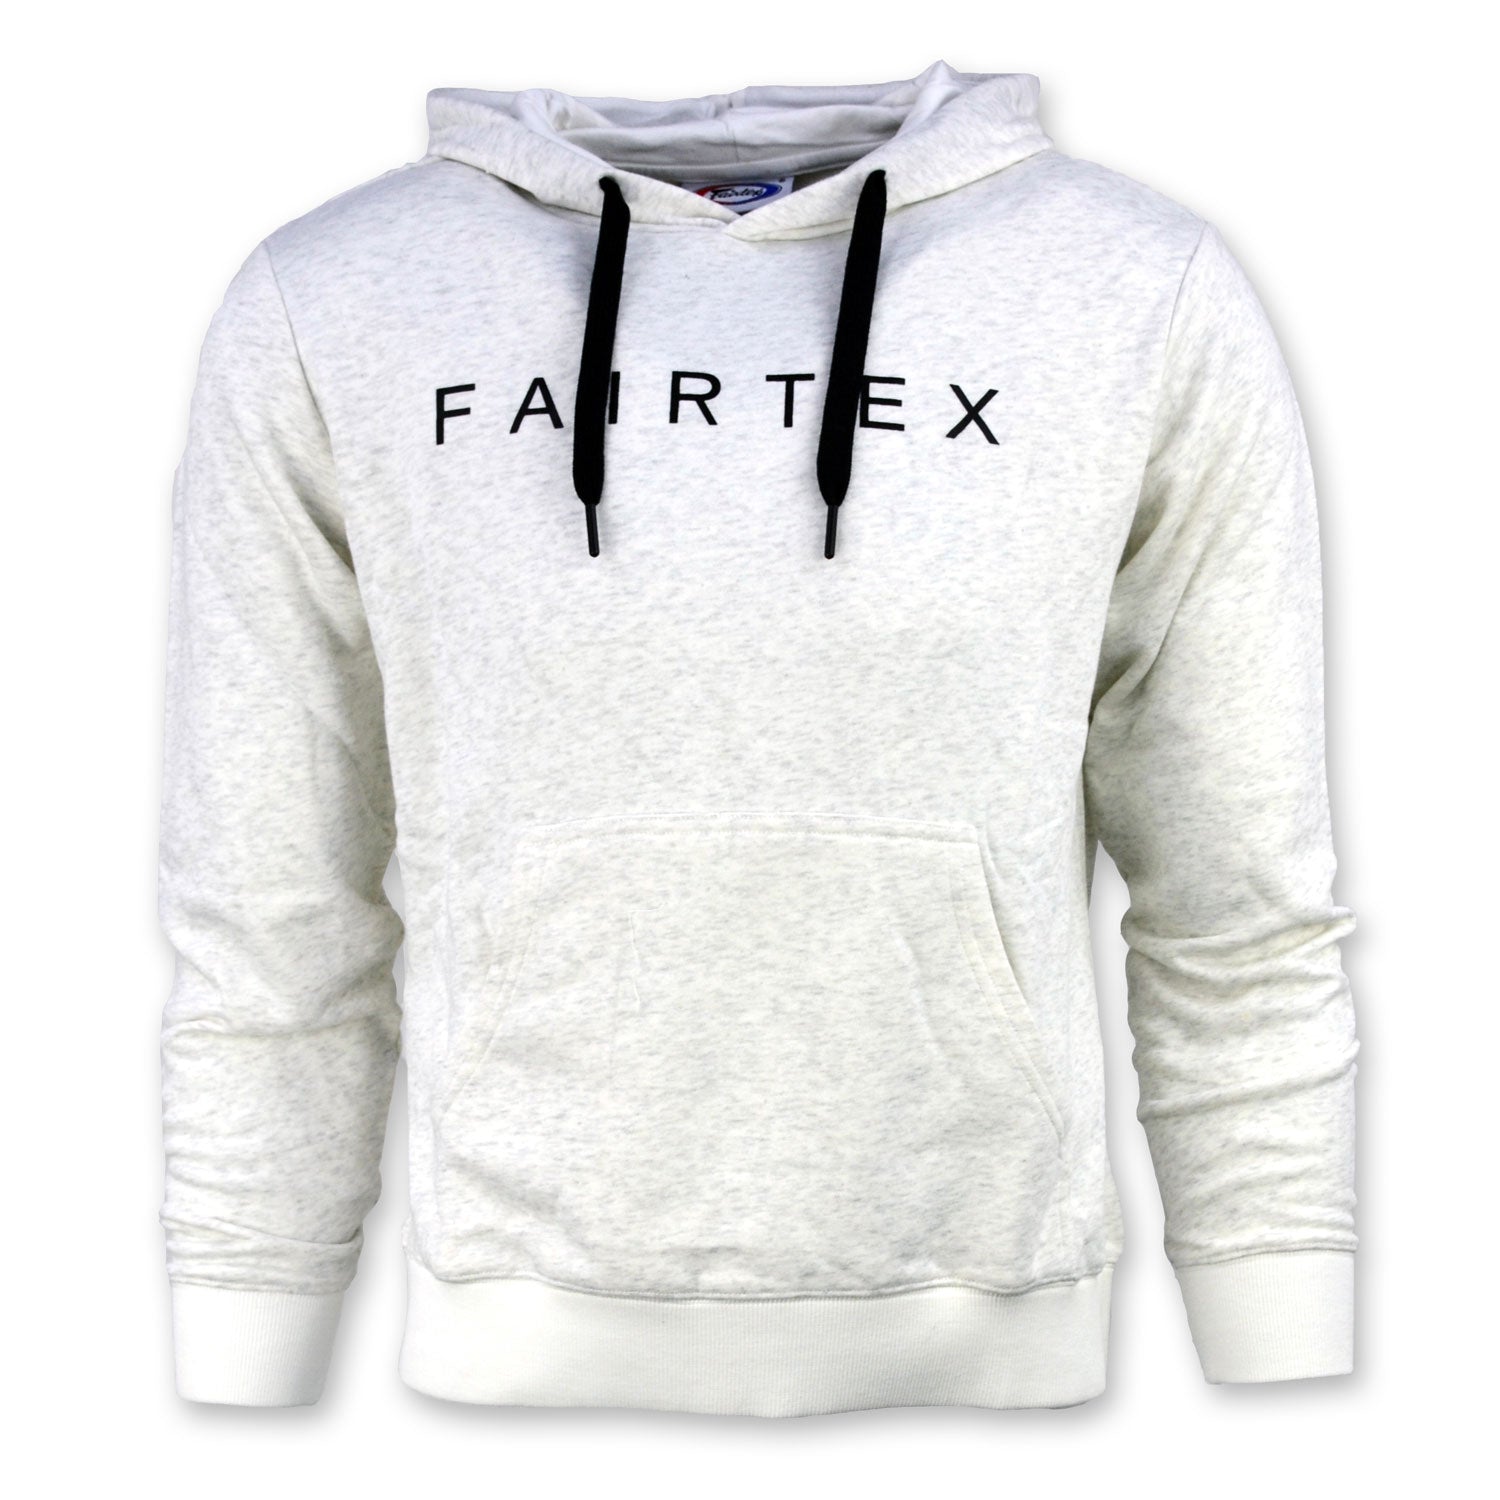 Image of FHS19 Fairtex Hooded Sweatshirt White